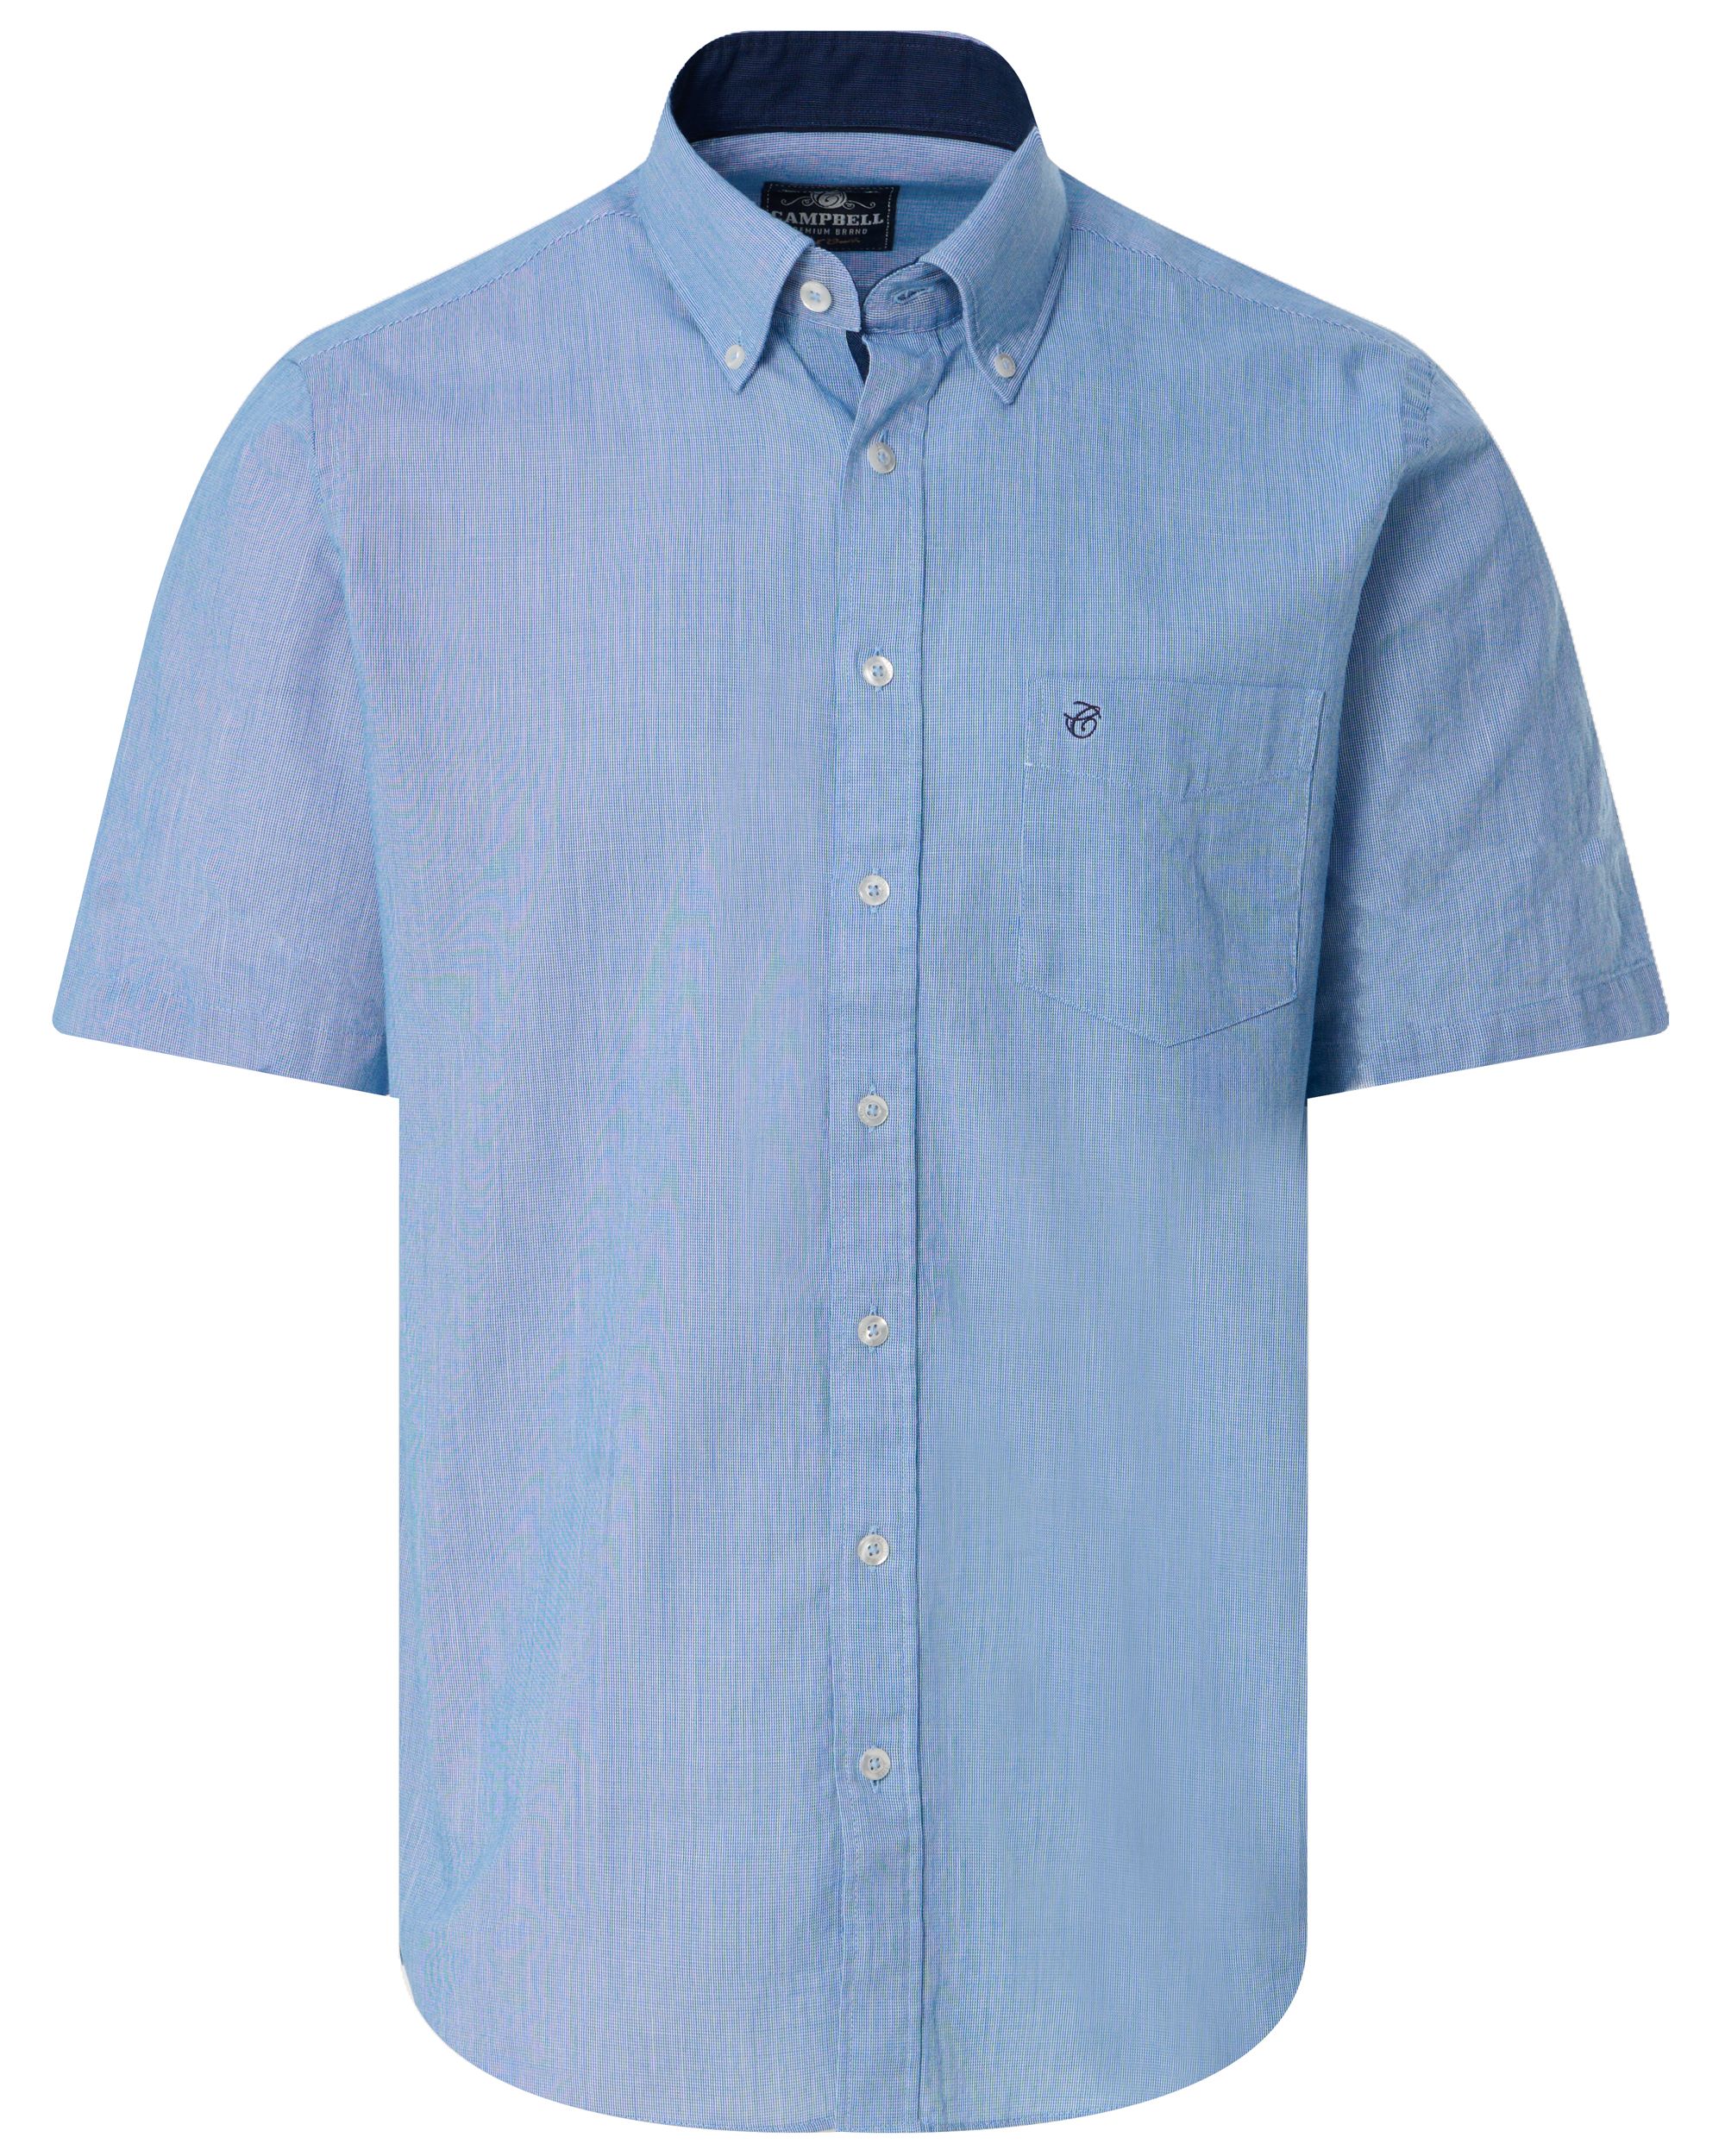 Campbell Classic Casual Overhemd KM Lichtblauw uni 091757-002-L